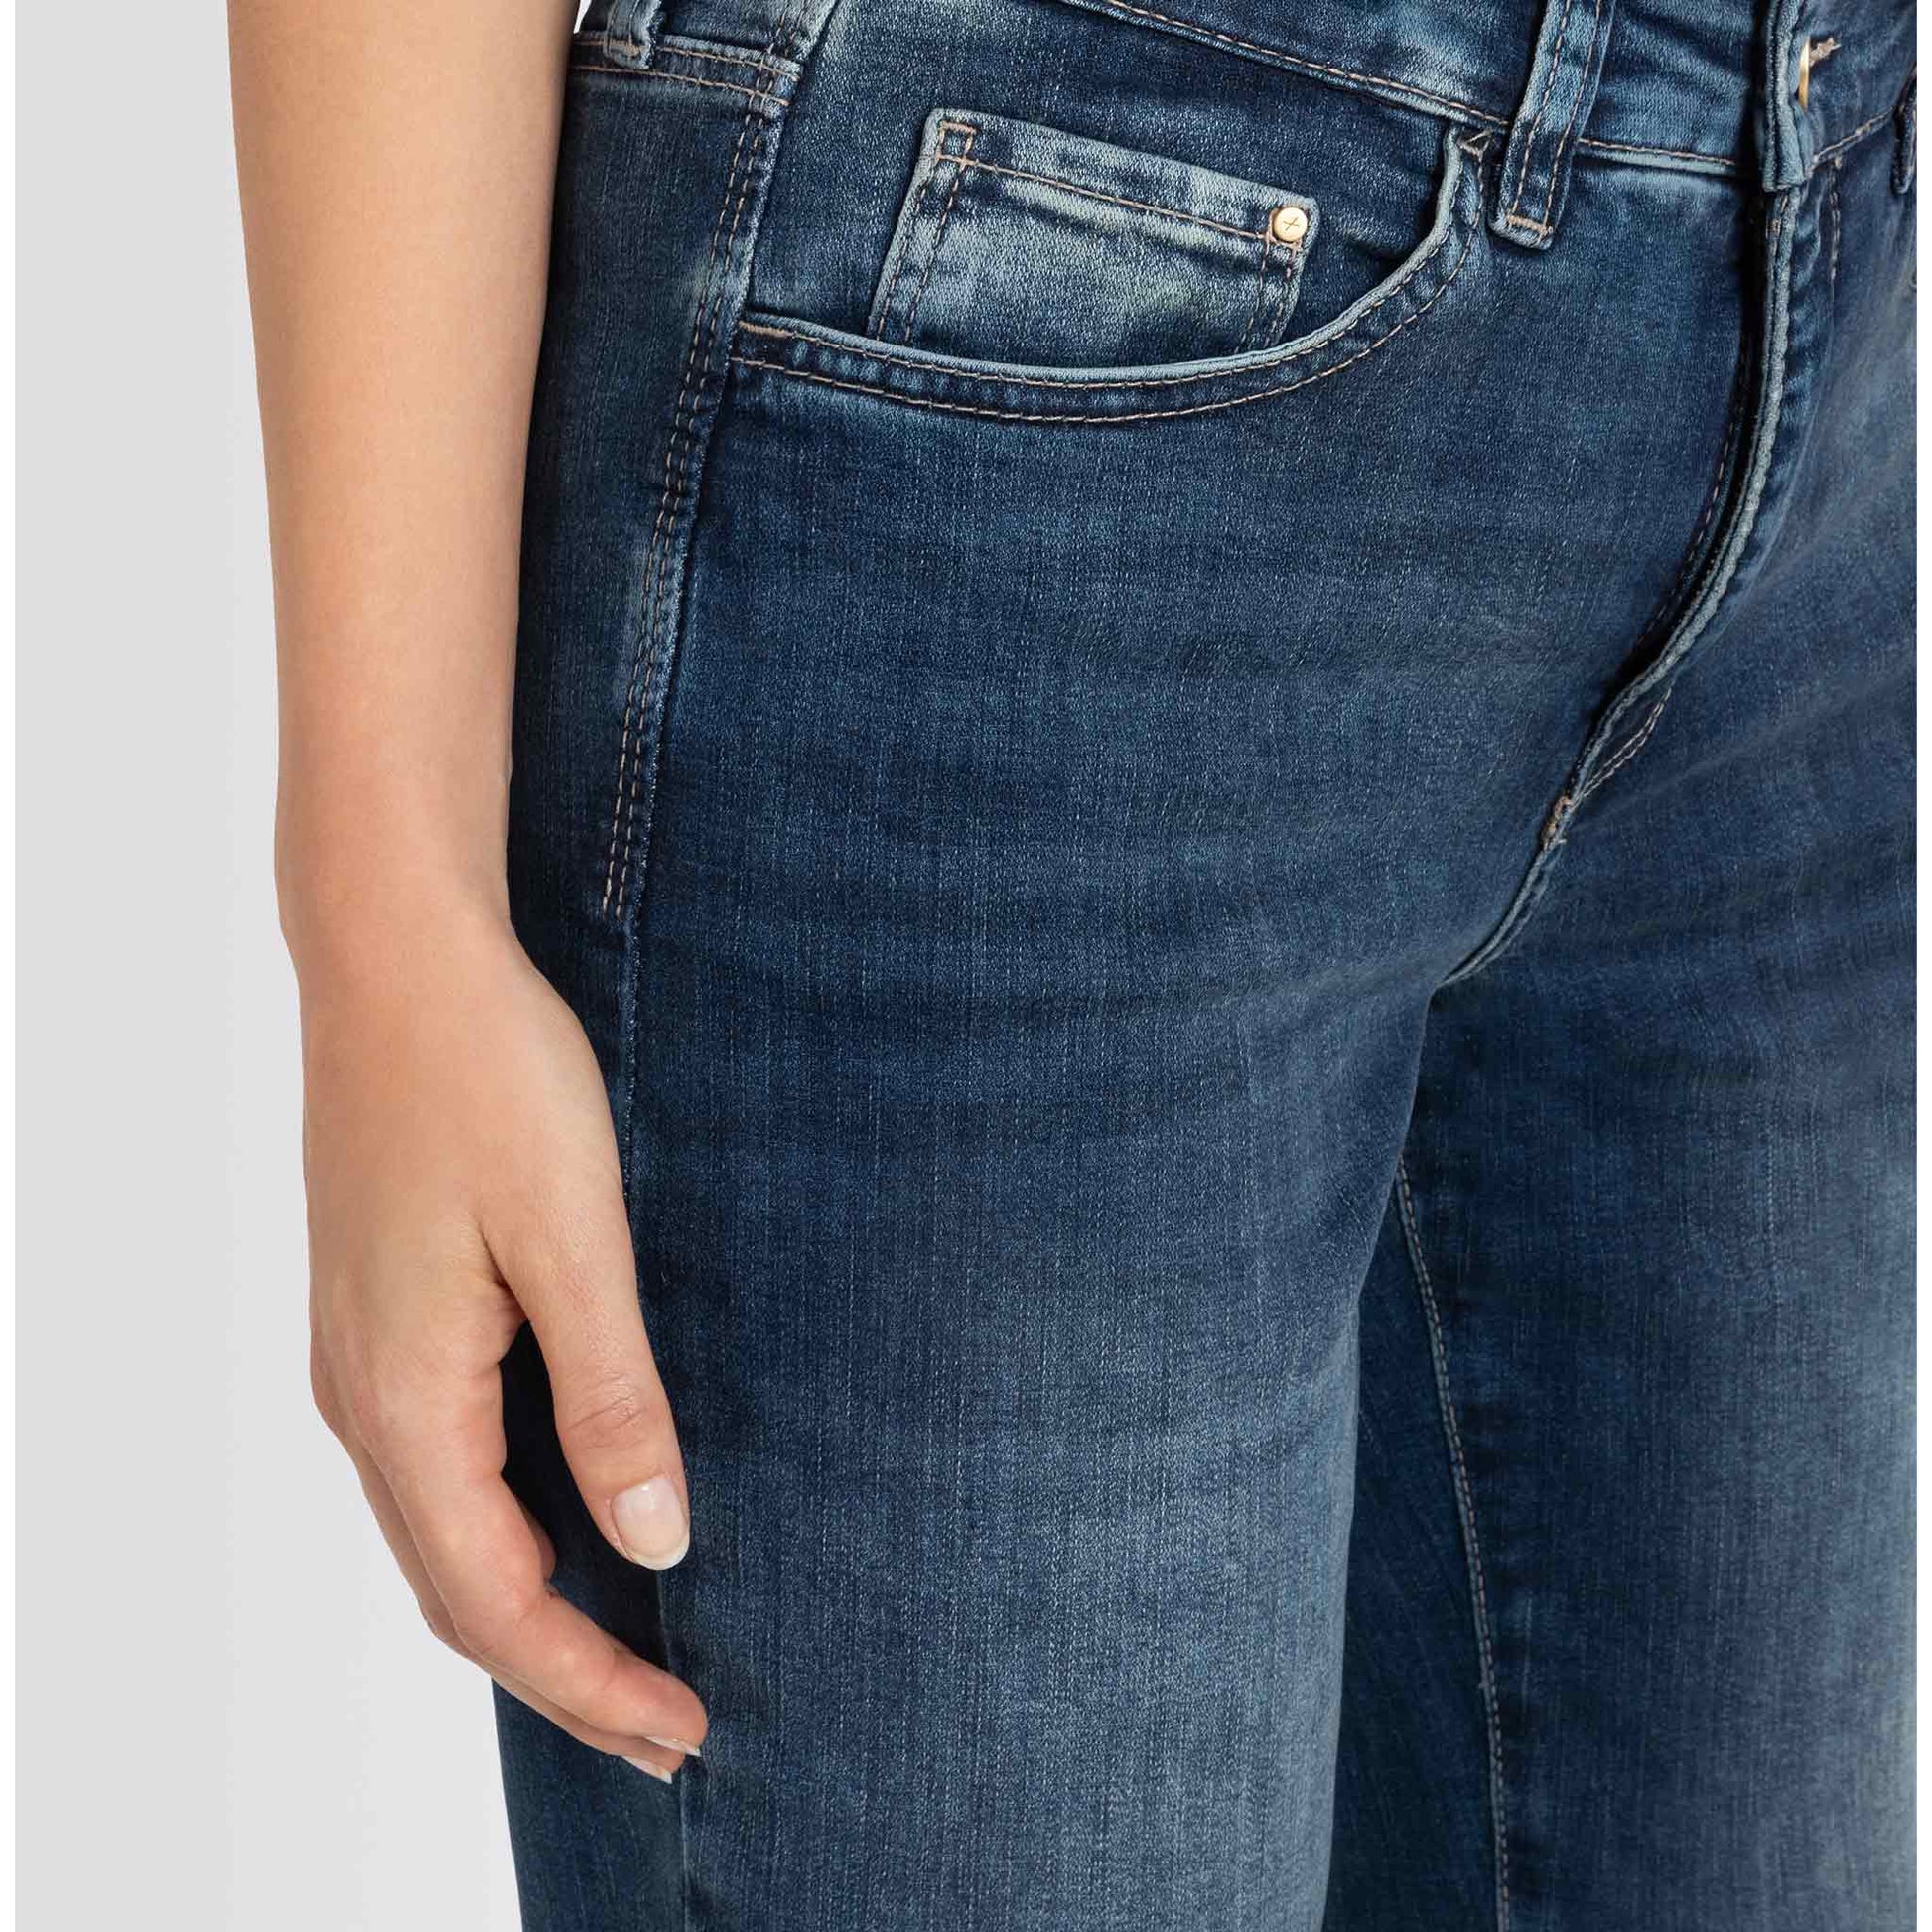 kleding lange vrouwen mac jeans dream auth medium bue